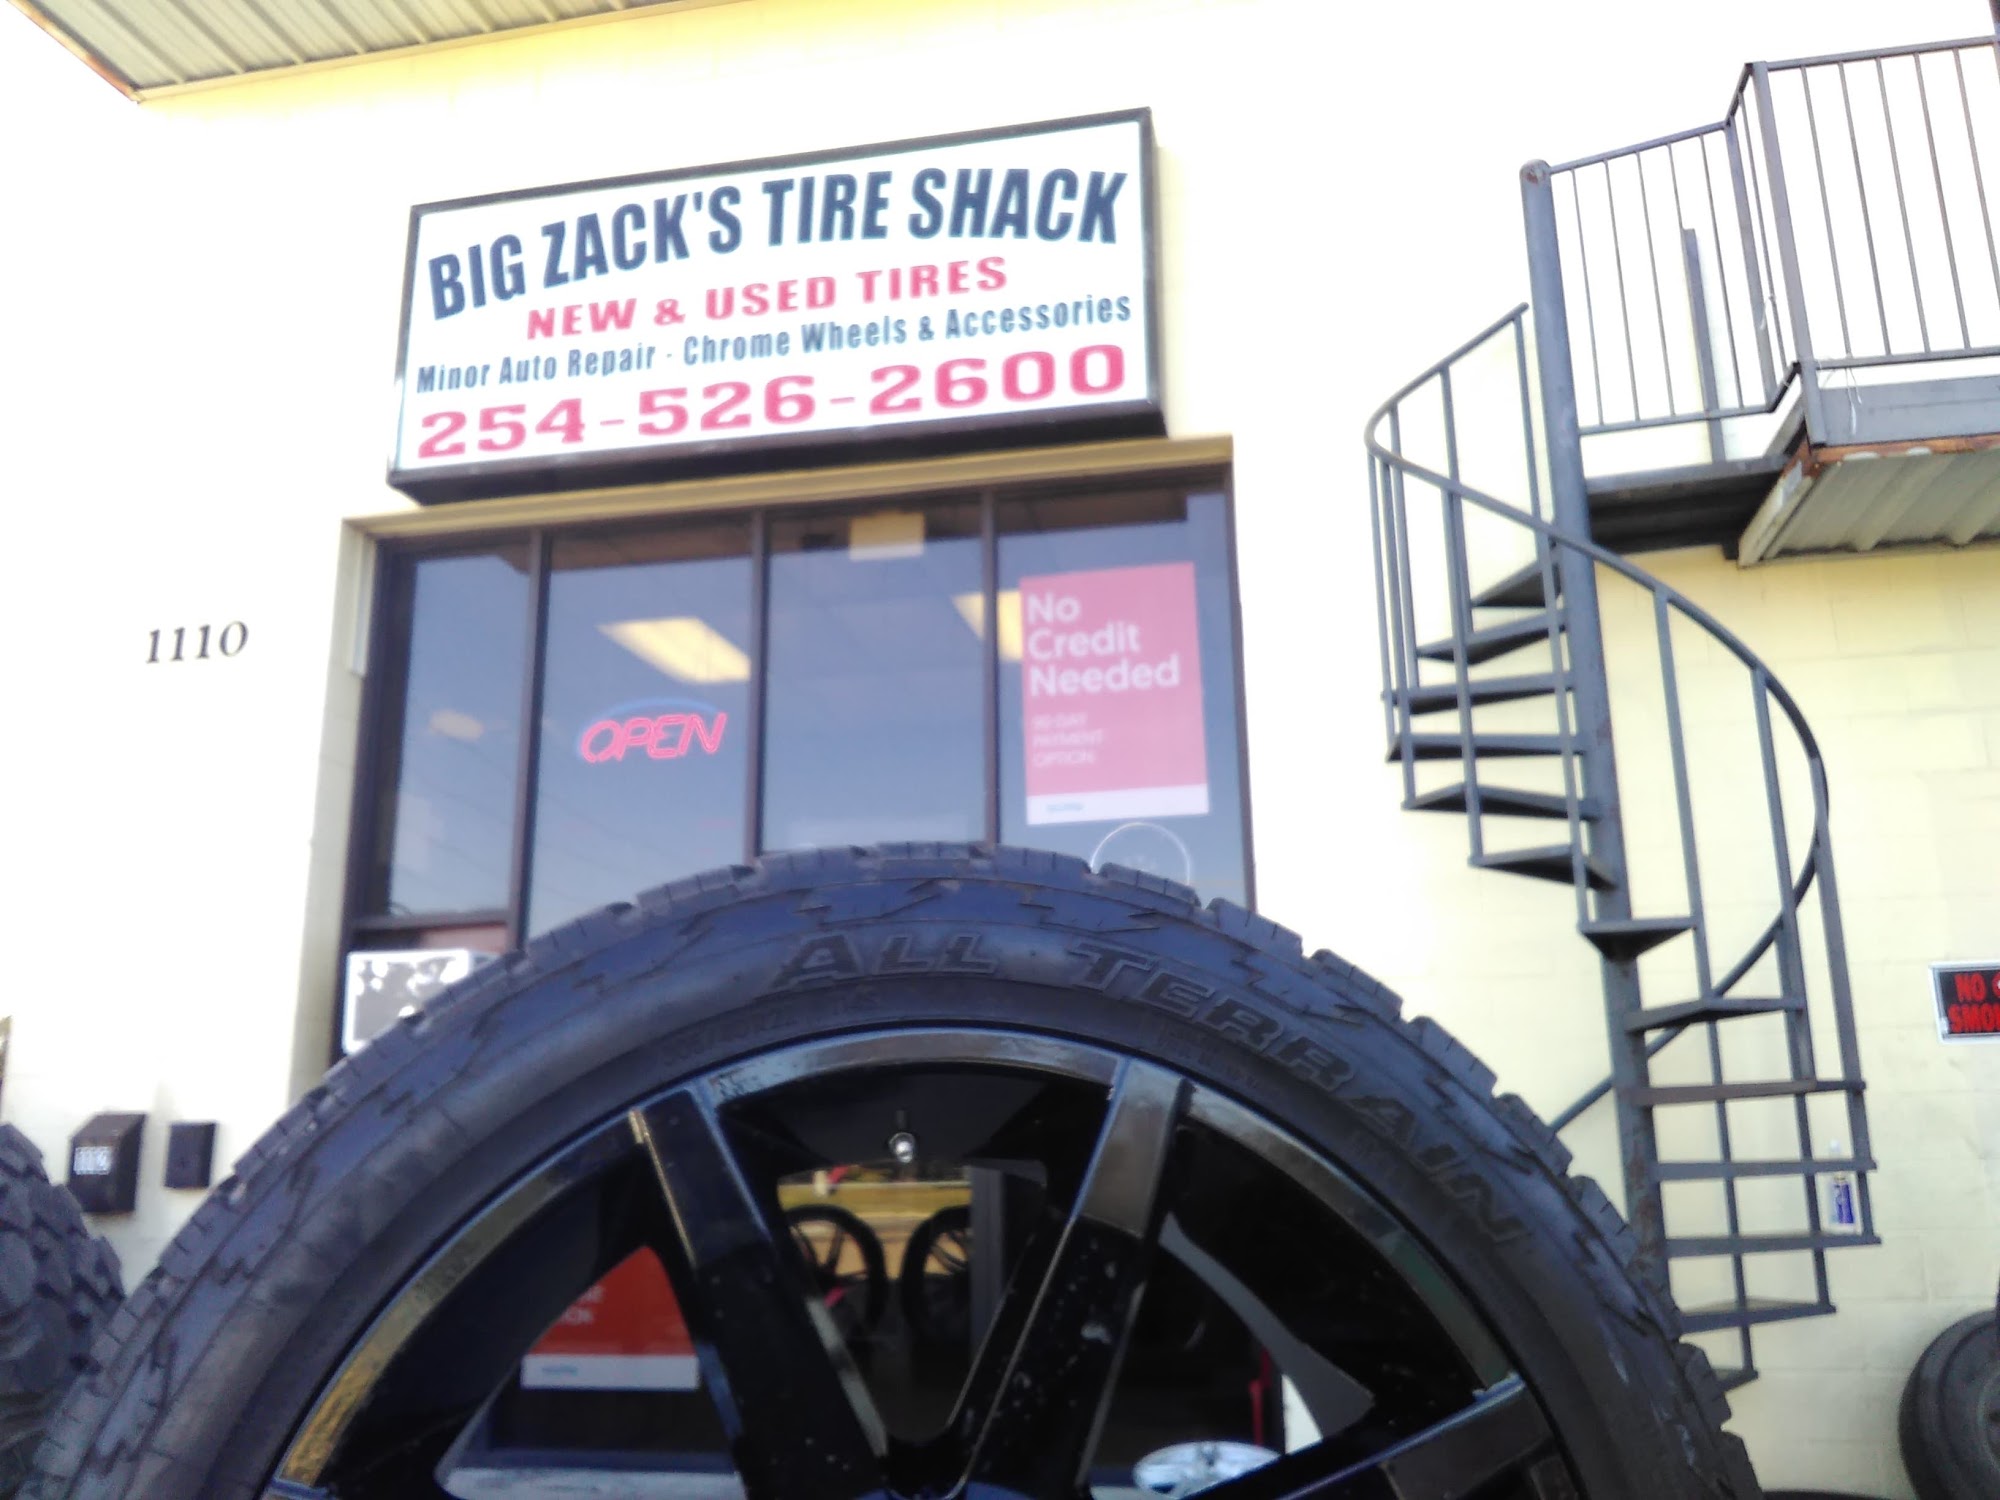 Big Zack's Tire Shack